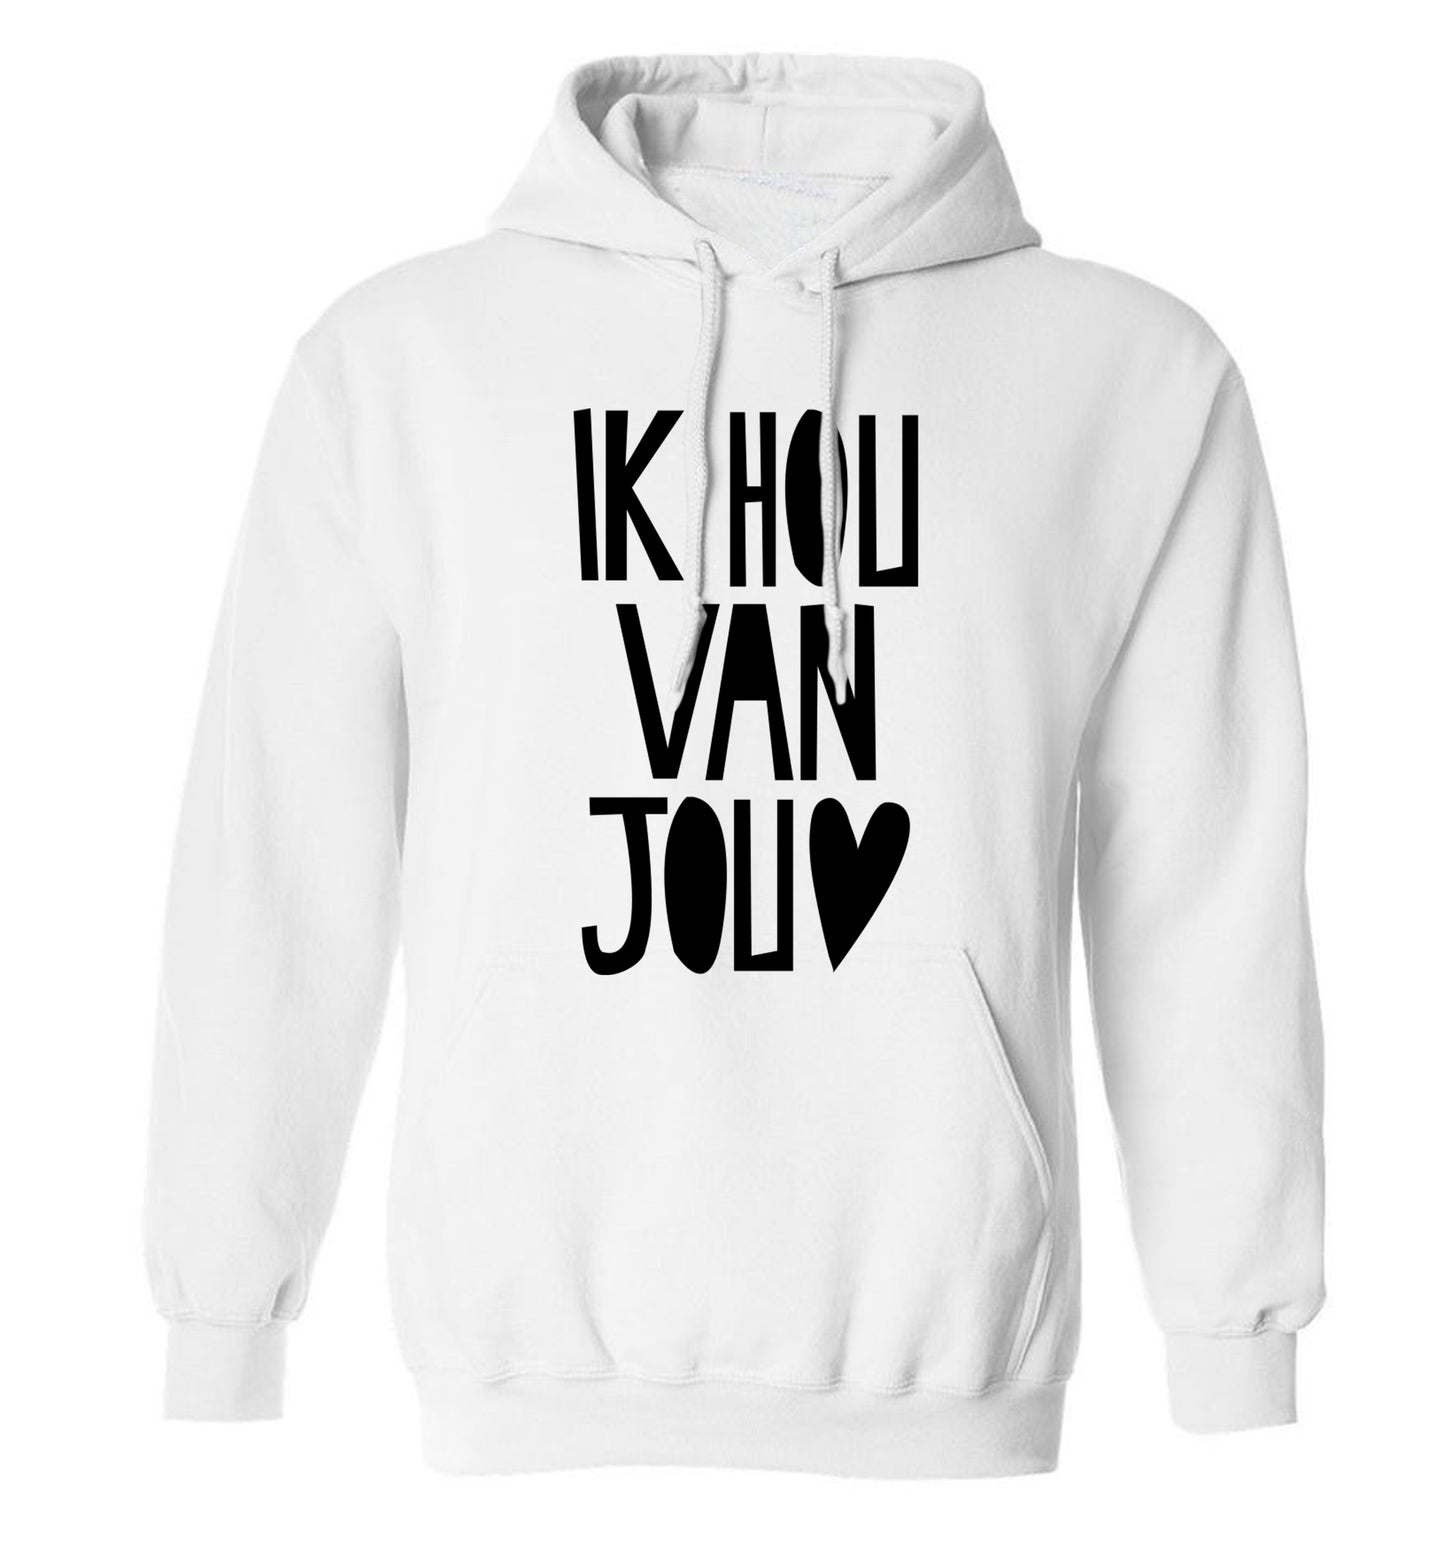 Ik Hau Van Jou - I love you adults unisex white hoodie 2XL